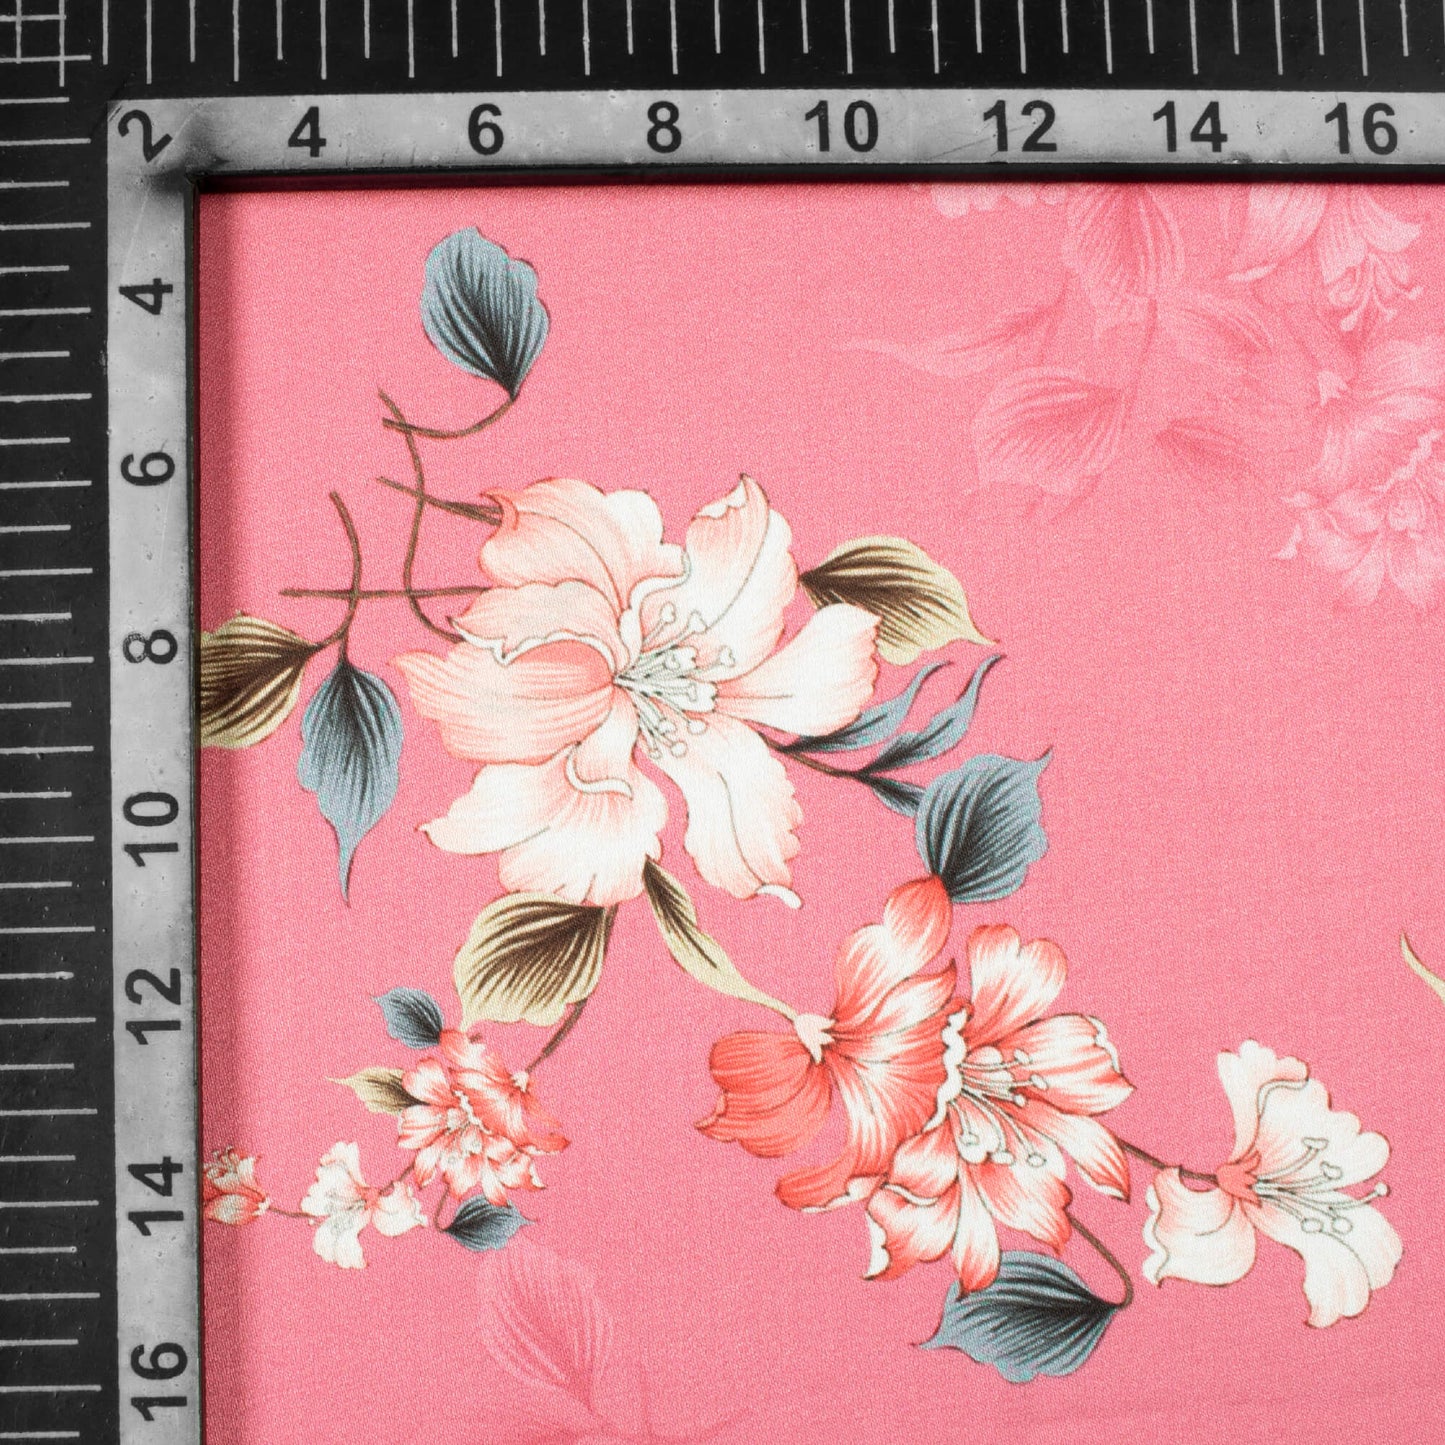 Rouge Pink And White Floral Pattern Digital Print Premium Lush Satin Fabric